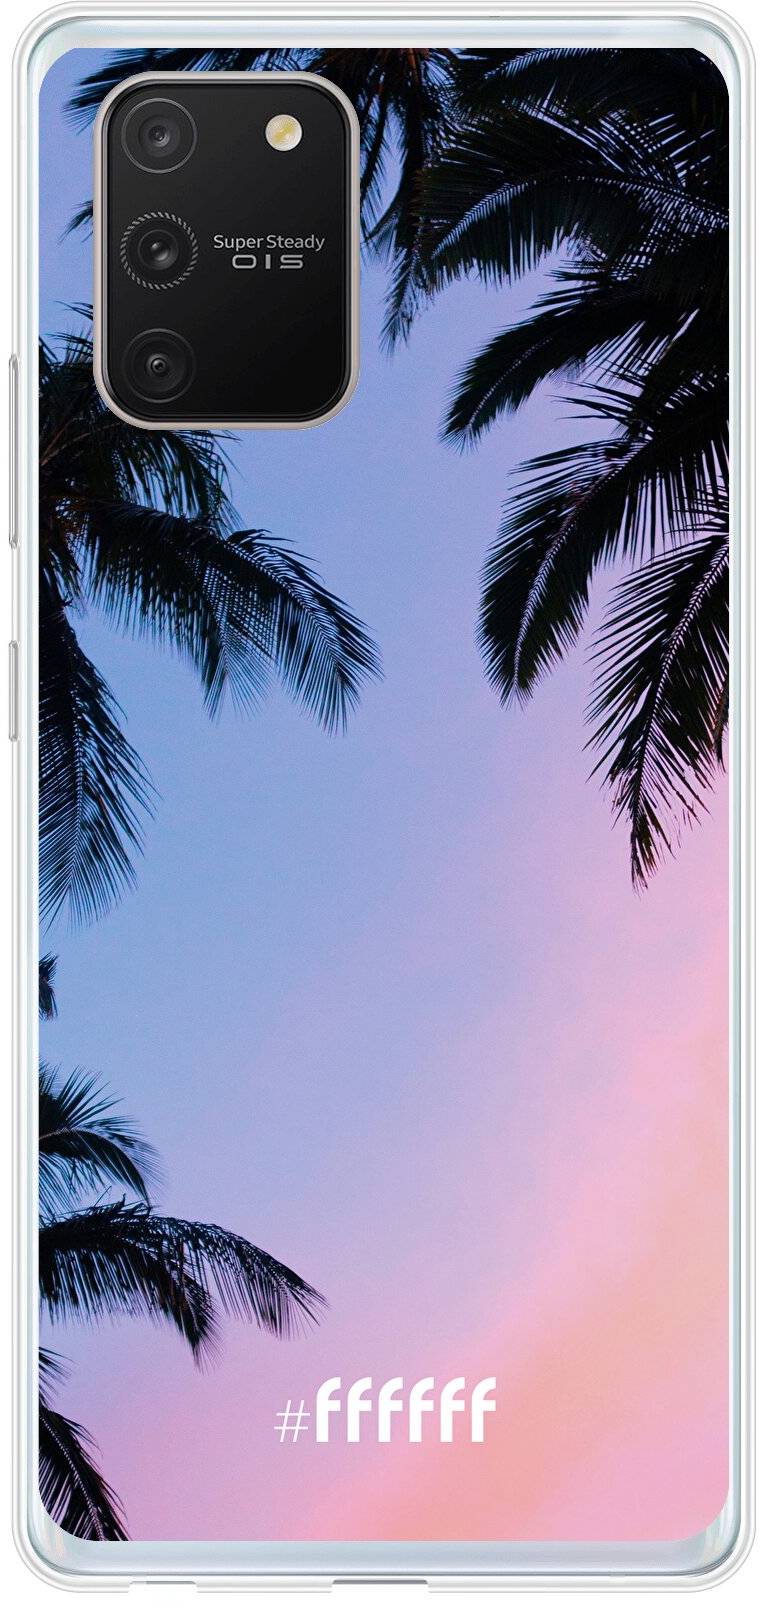 Sunset Palms Galaxy S10 Lite